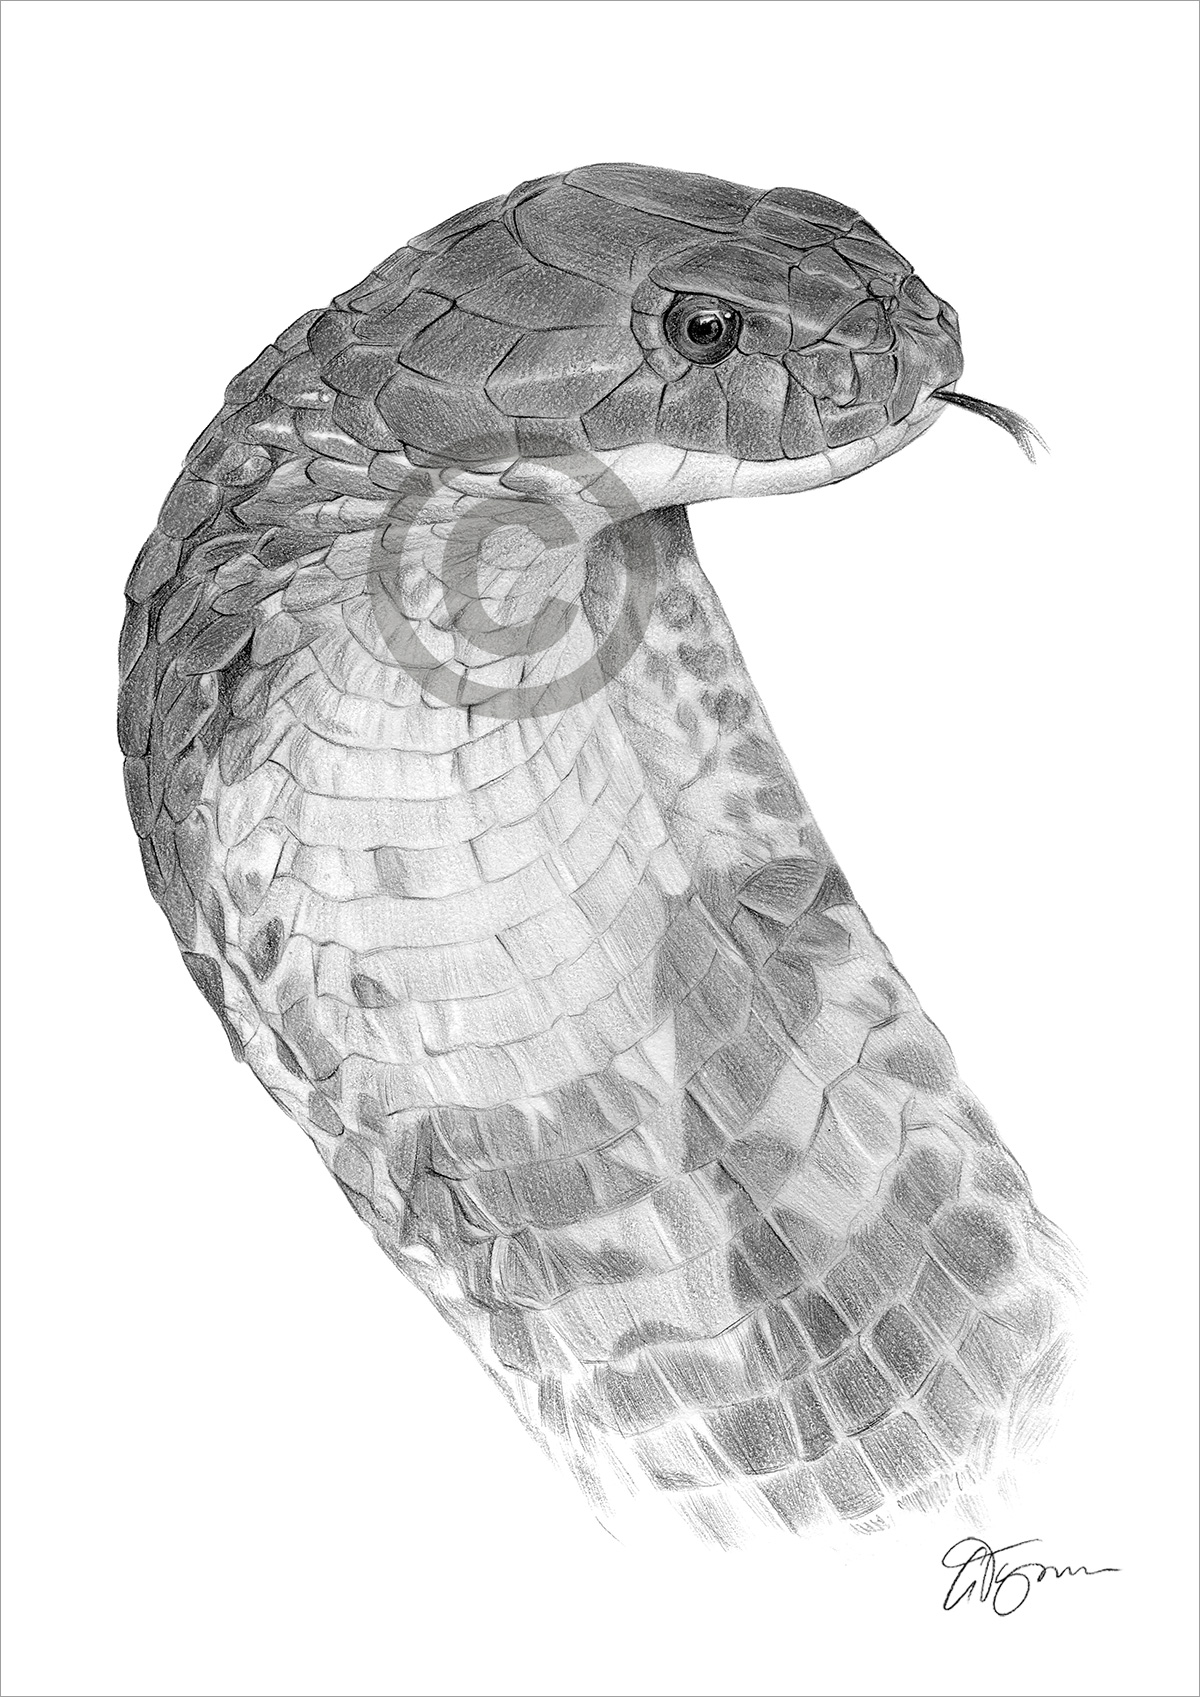 Pencil drawing of a king cobra by artist Gary Tymon